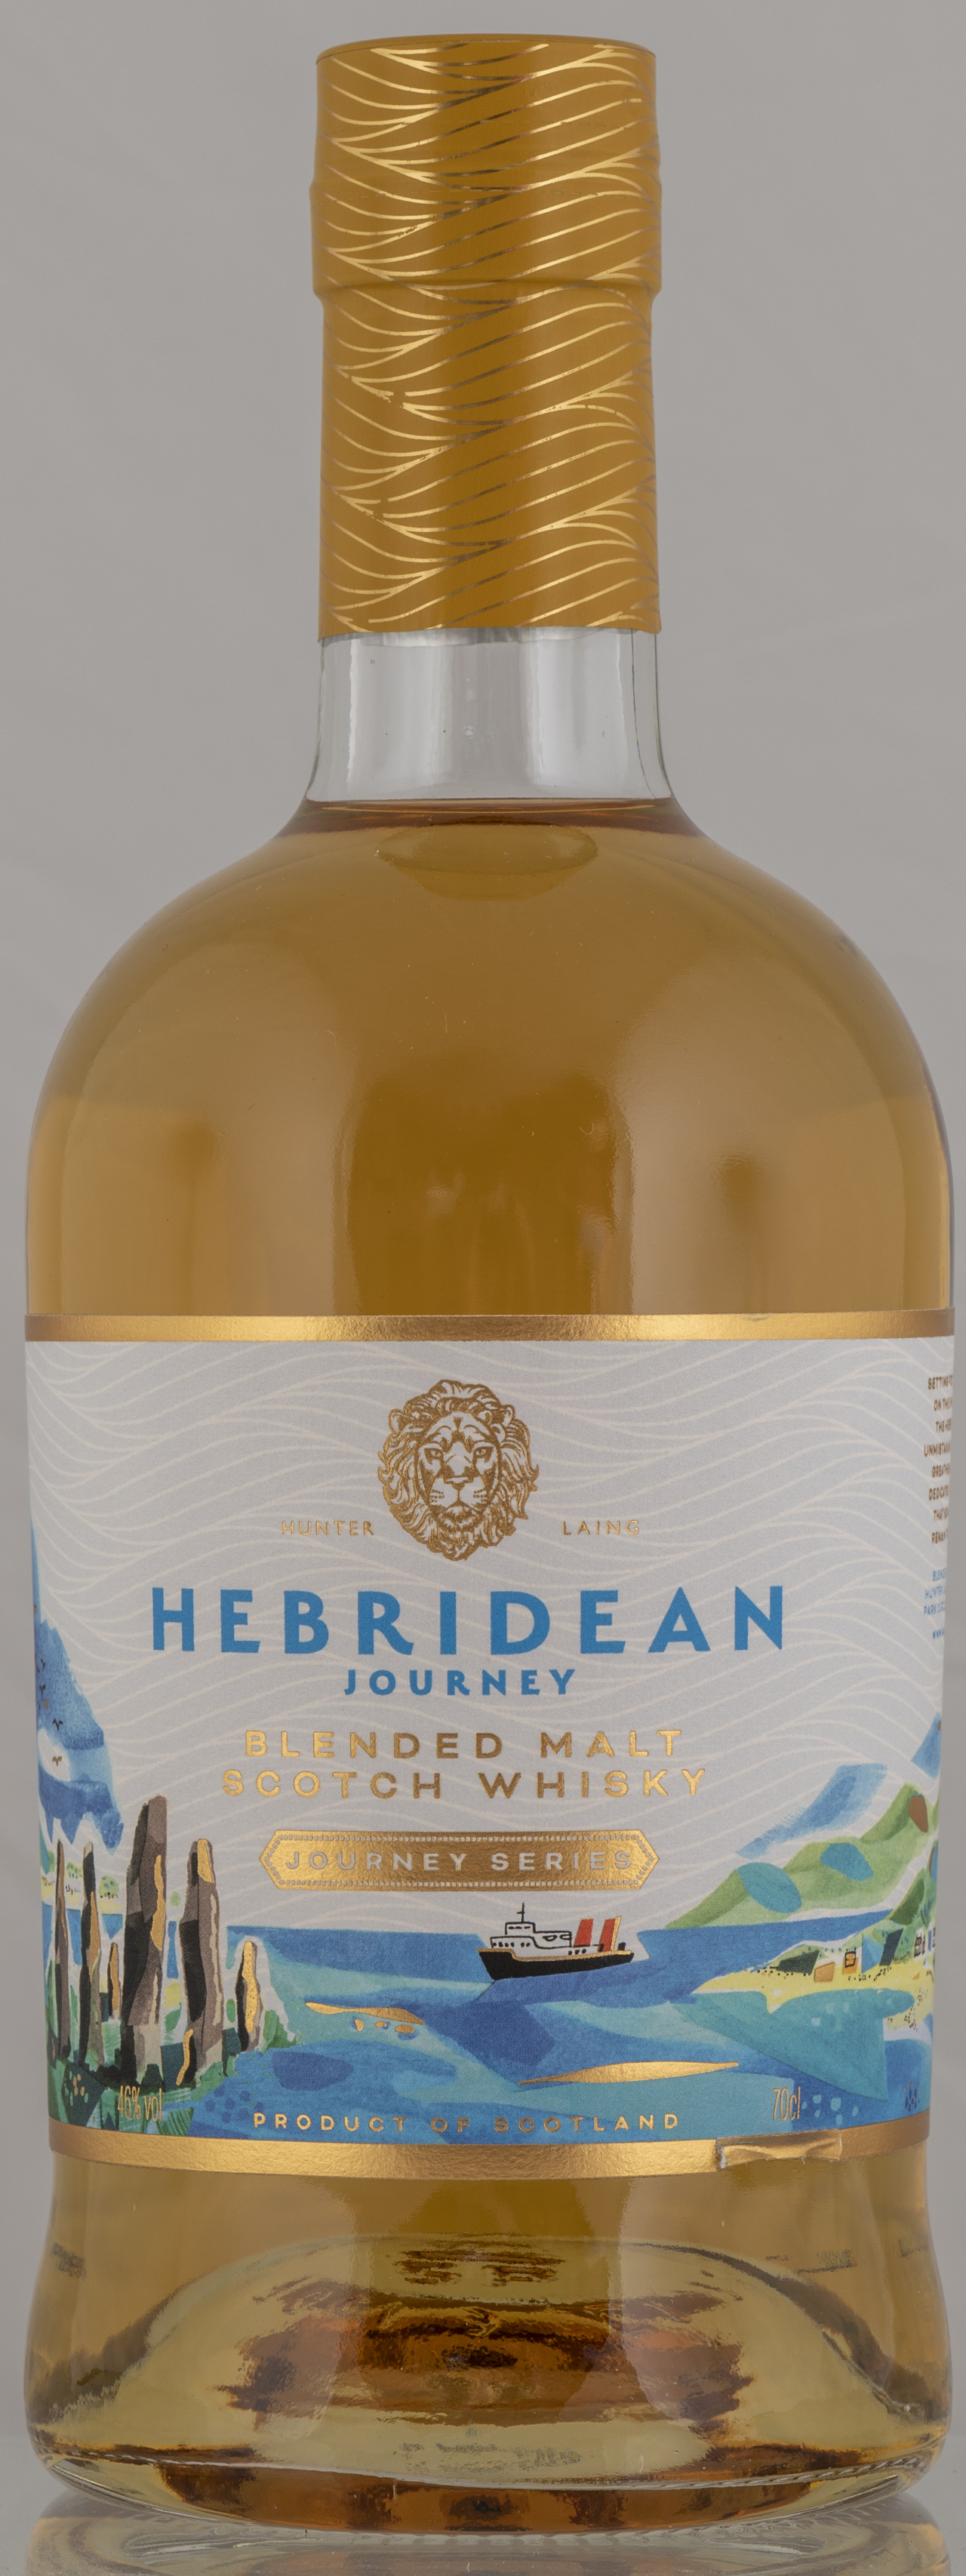 Billede: PHC_7334 - Hunter Laing Hebridean Journey Blended Malt - bottle front.jpg